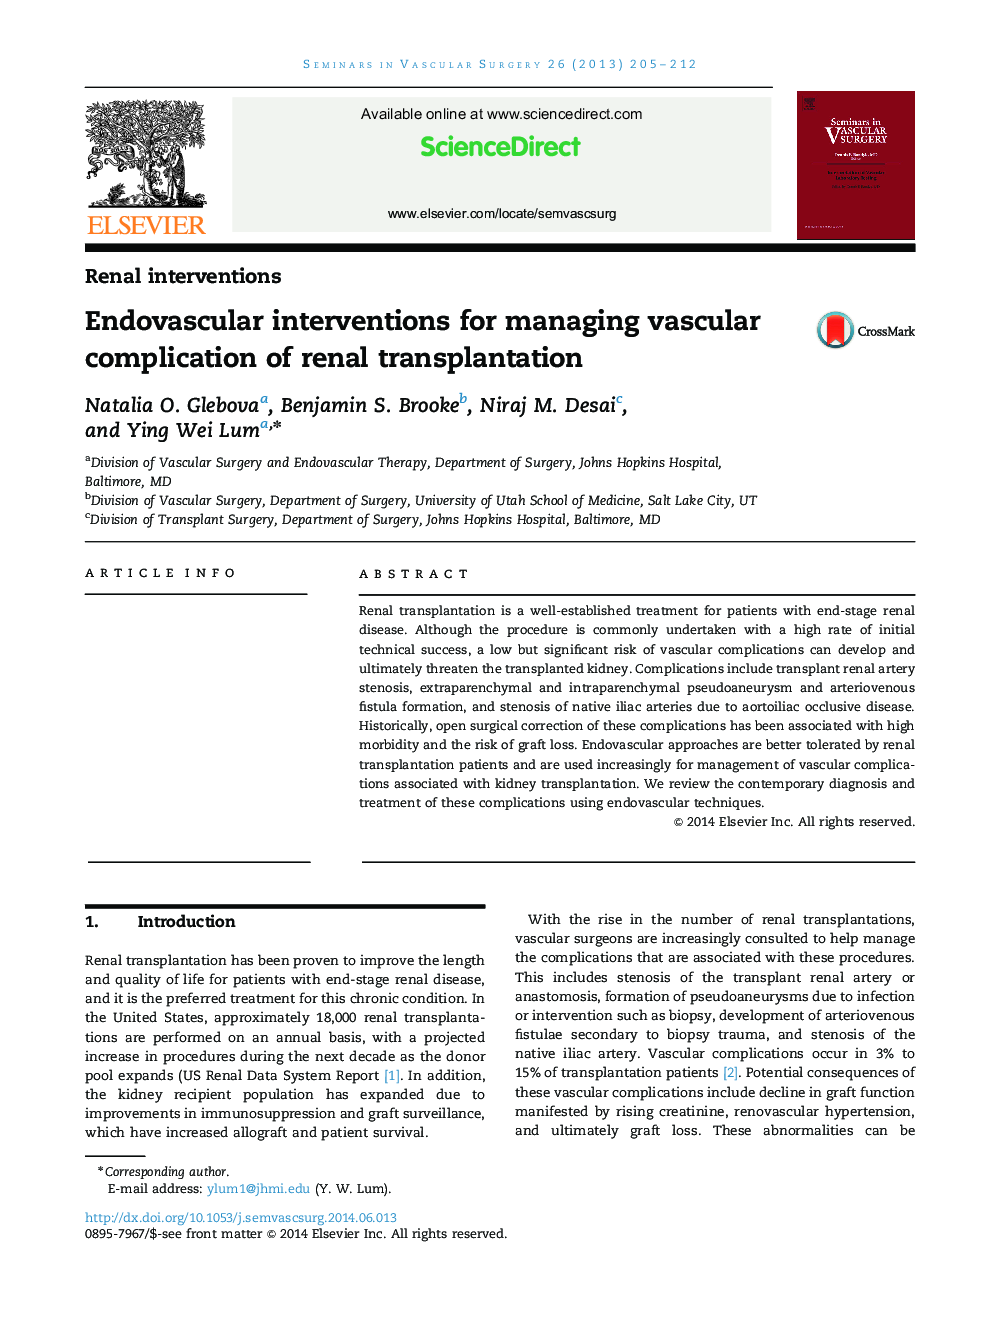 Endovascular interventions for managing vascular complication of renal transplantation